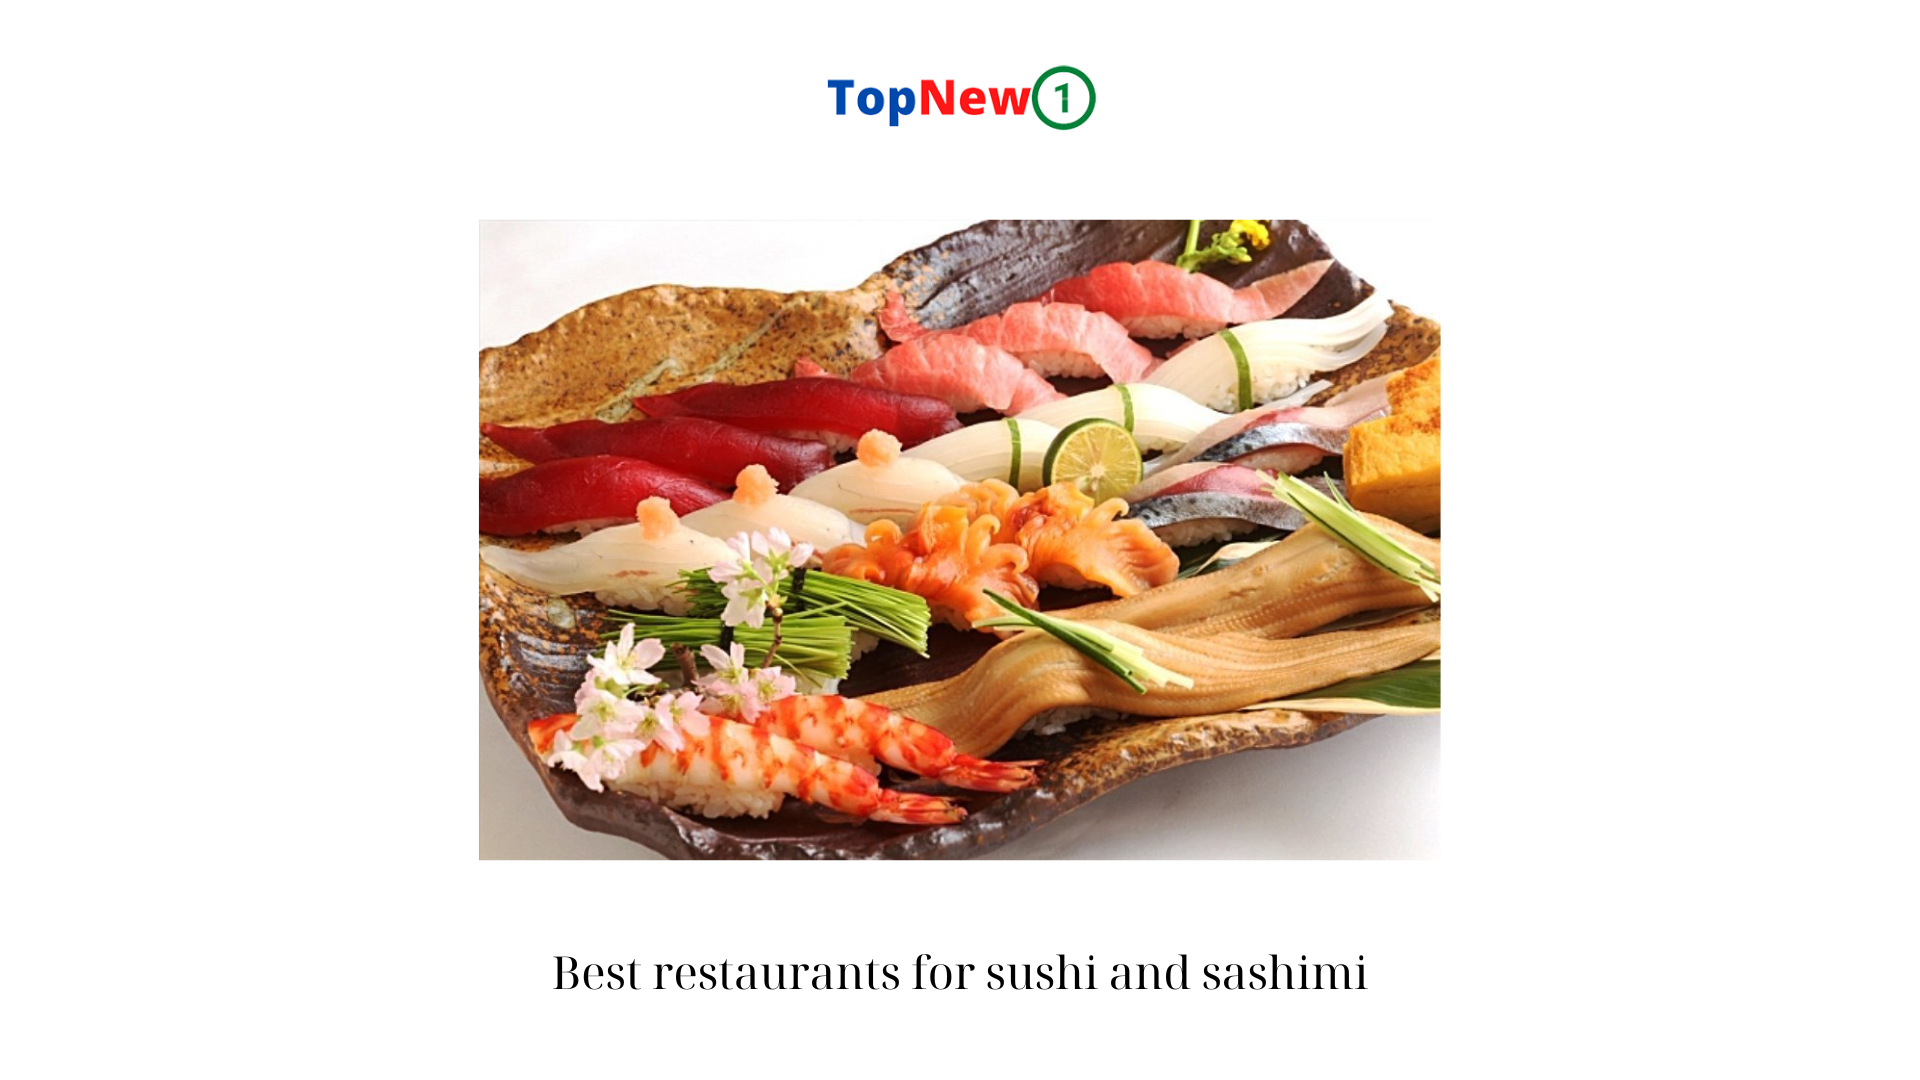 Best restaurants for sushi and sashimi 2